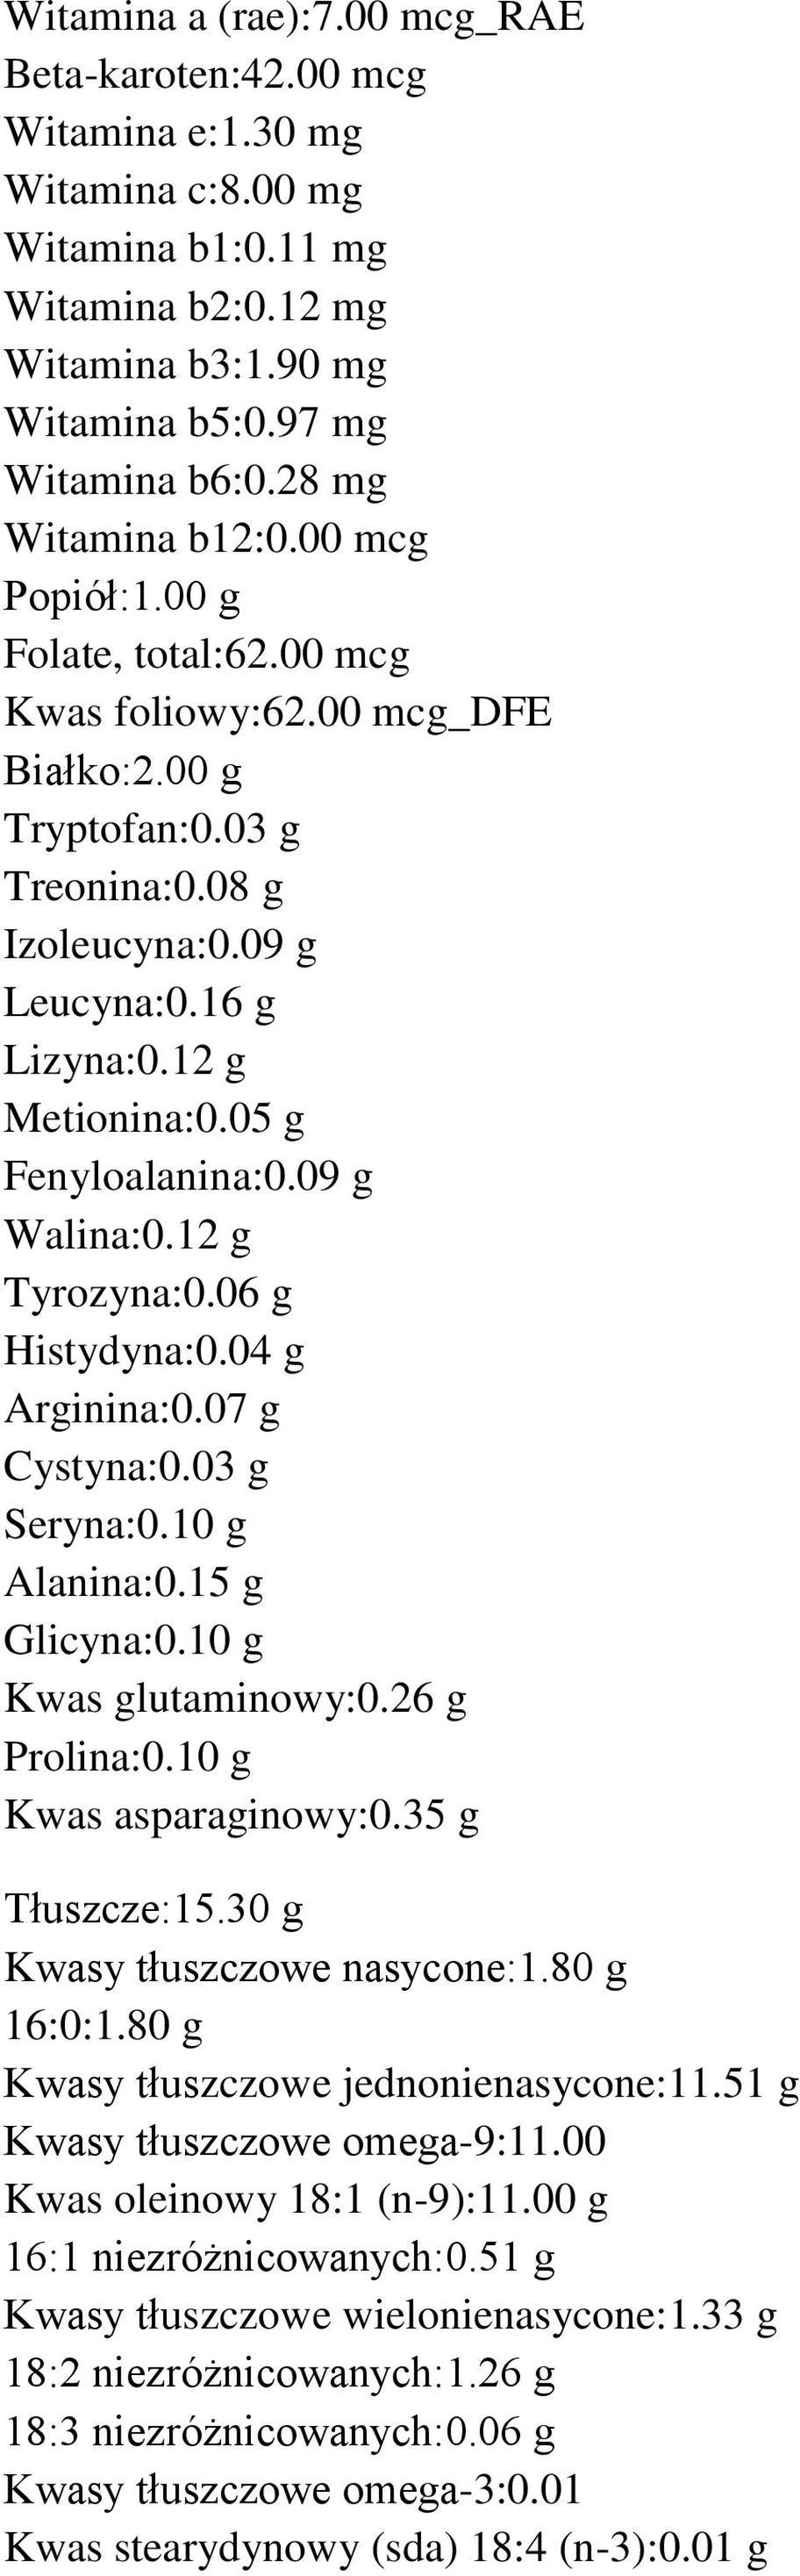 05 g Fenyloalanina:0.09 g Walina:0.12 g Tyrozyna:0.06 g Histydyna:0.04 g Arginina:0.07 g Cystyna:0.03 g Seryna:0.10 g Alanina:0.15 g Glicyna:0.10 g Kwas glutaminowy:0.26 g Prolina:0.